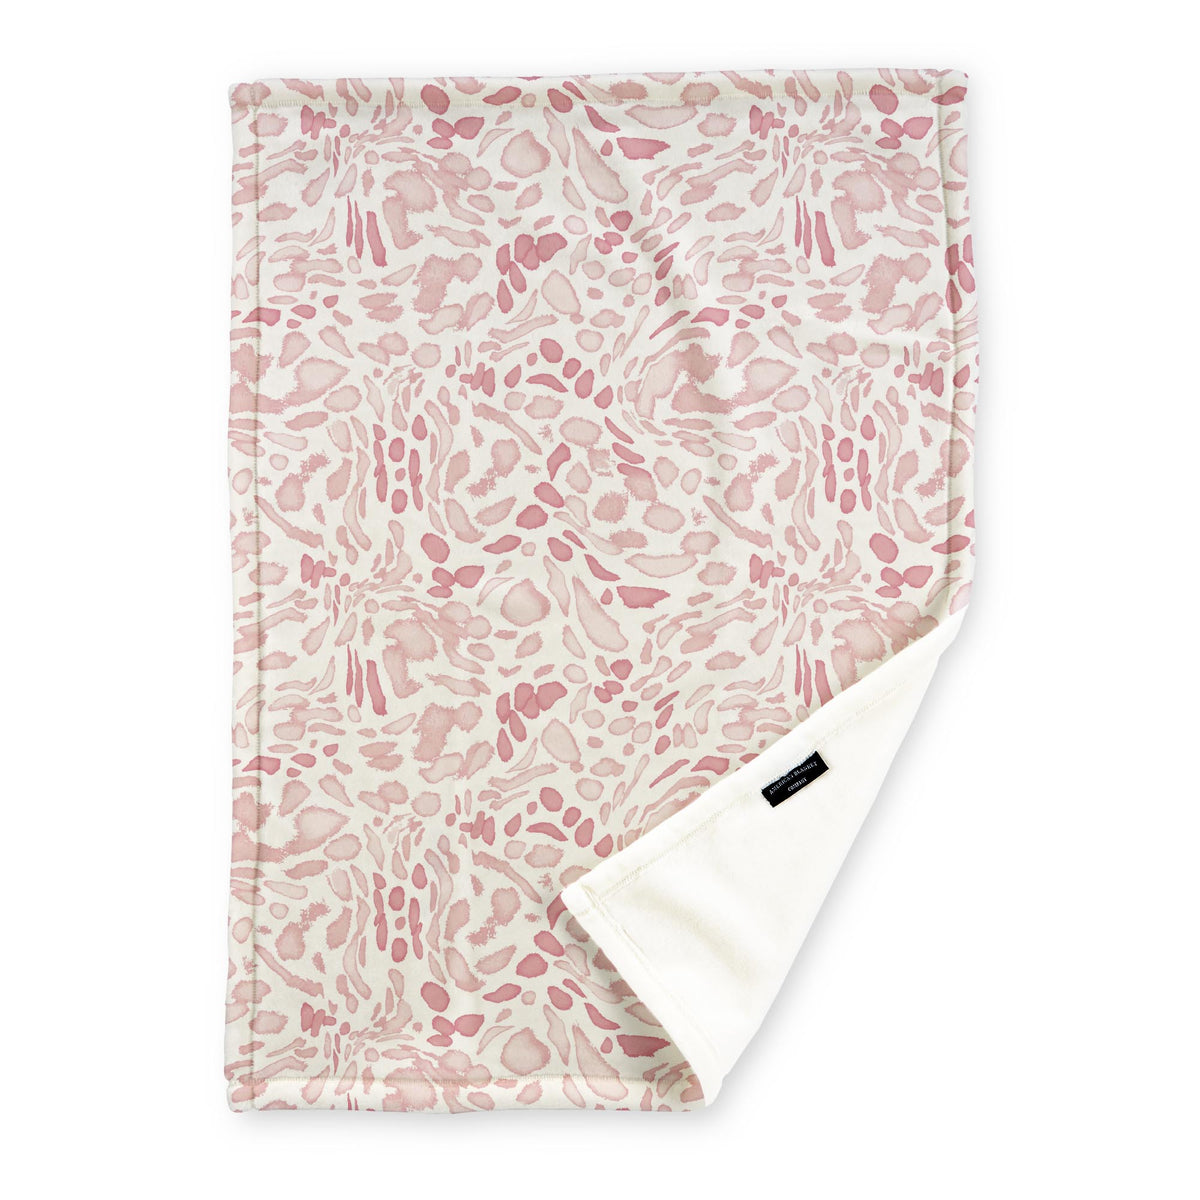 Printed Fleece Throw Blankets | Animal Print Fashion Throws